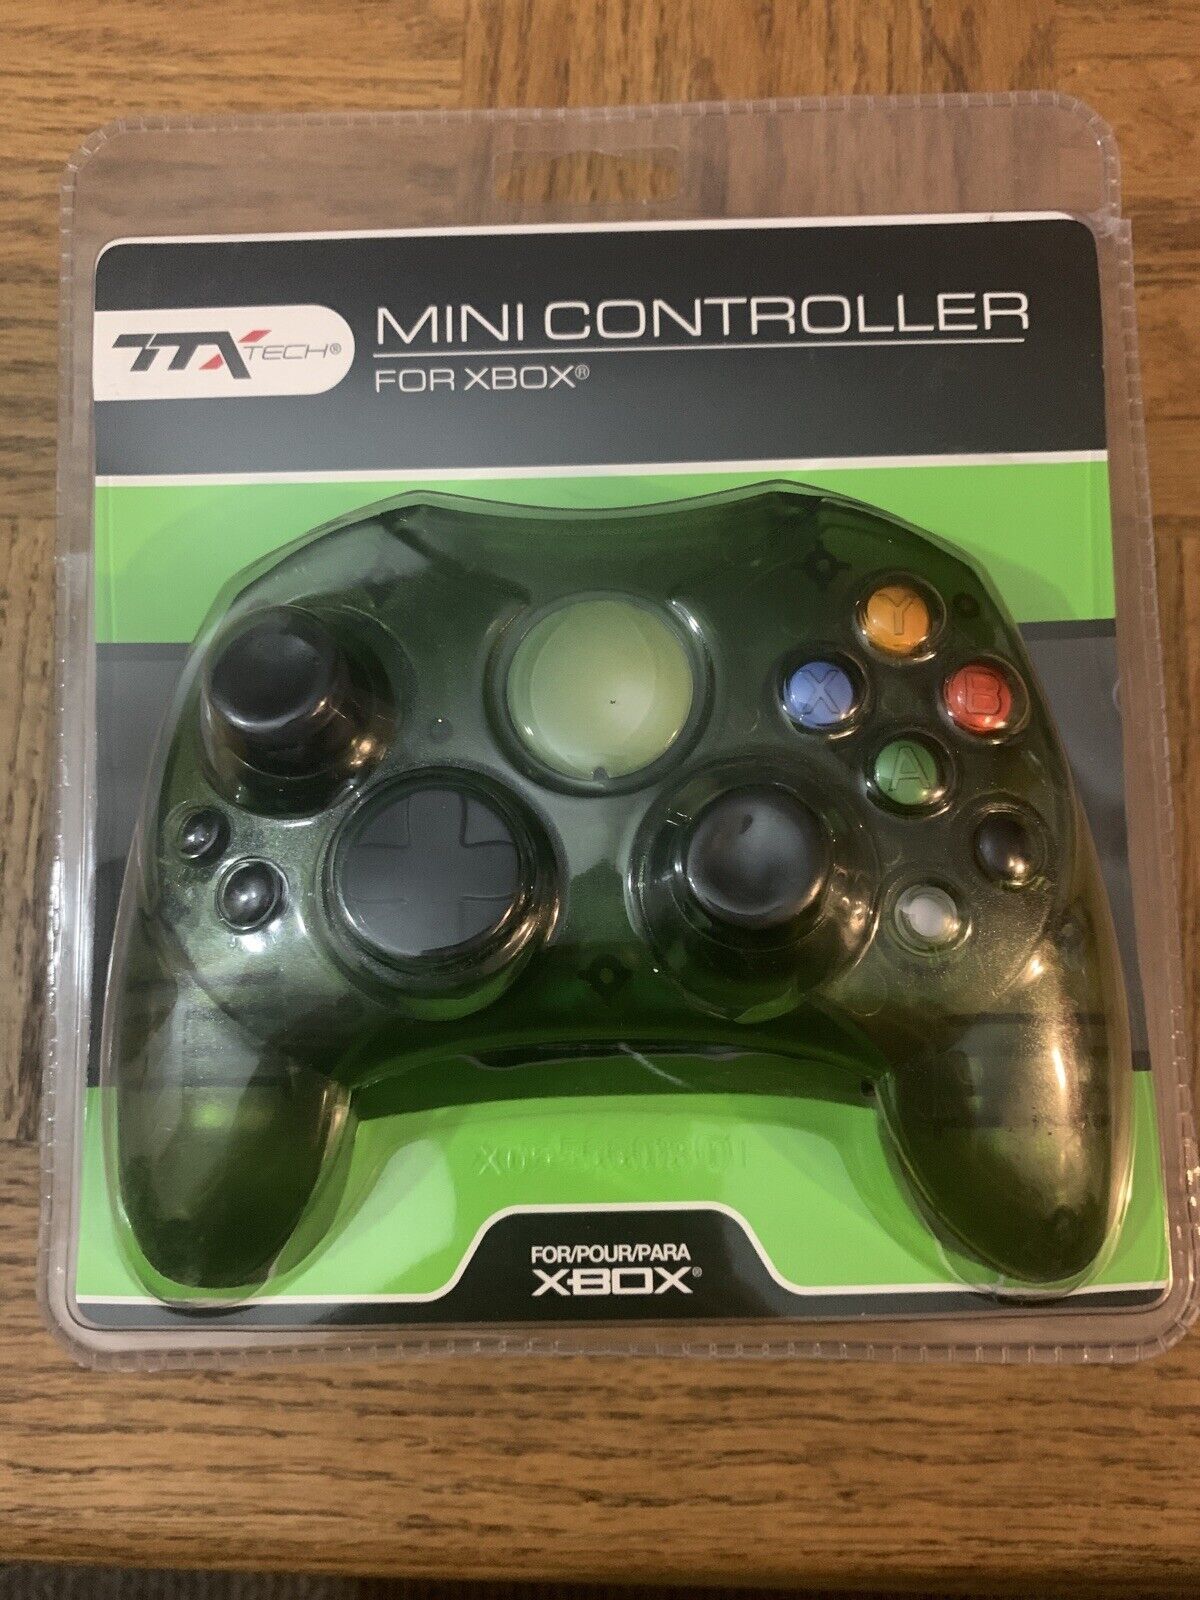 TTX Tech Mini Controller For XBOX Green - $44.43